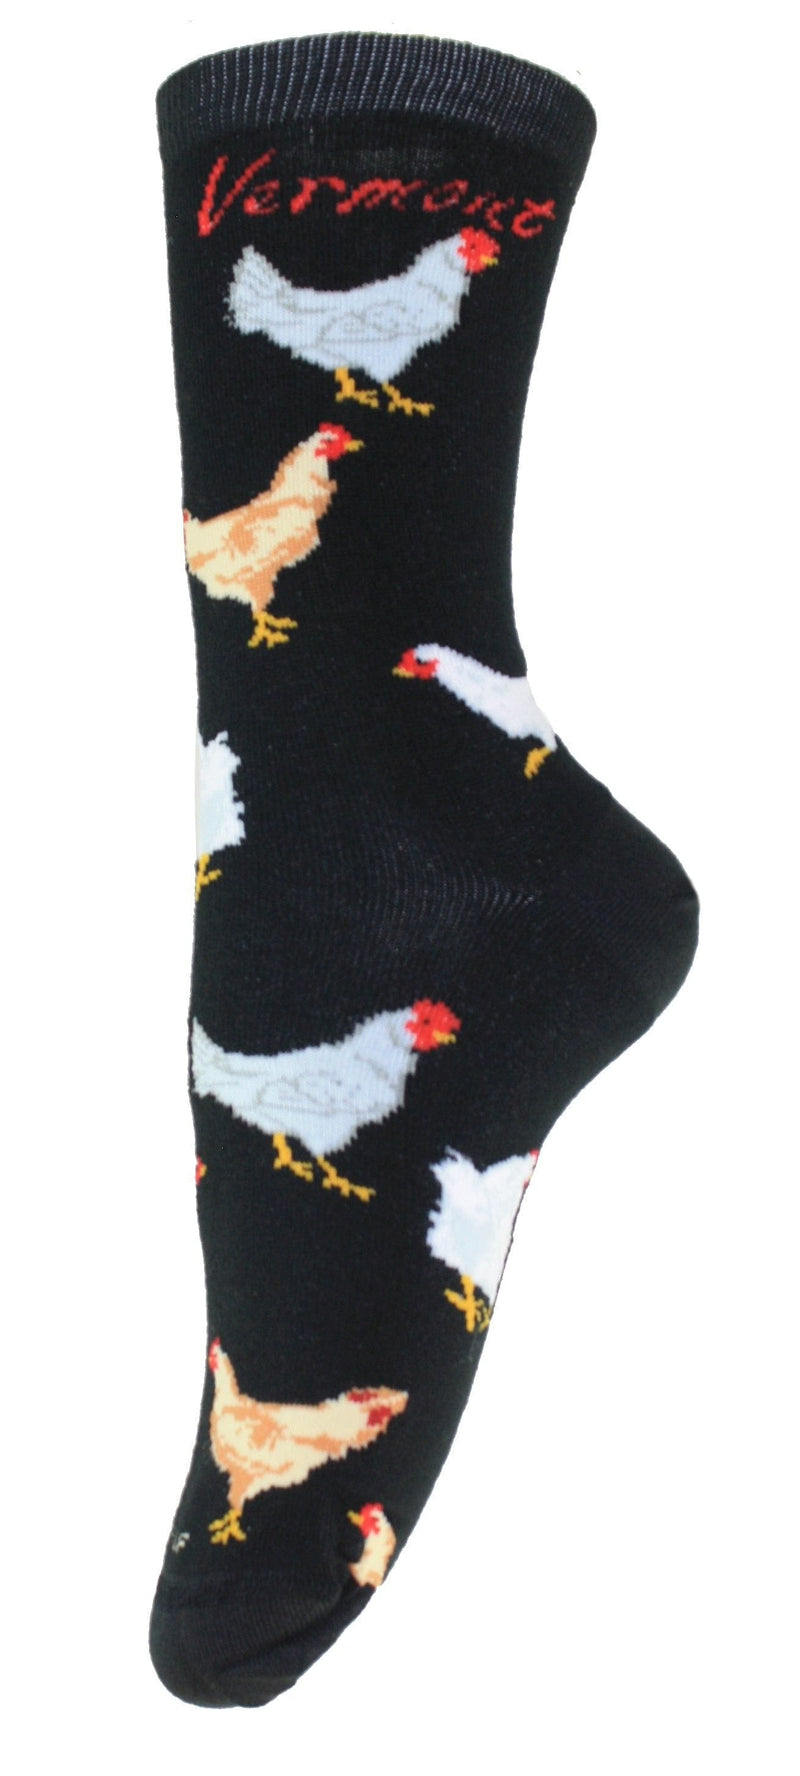 Vermont Chickens Socks Medium - Shelburne Country Store